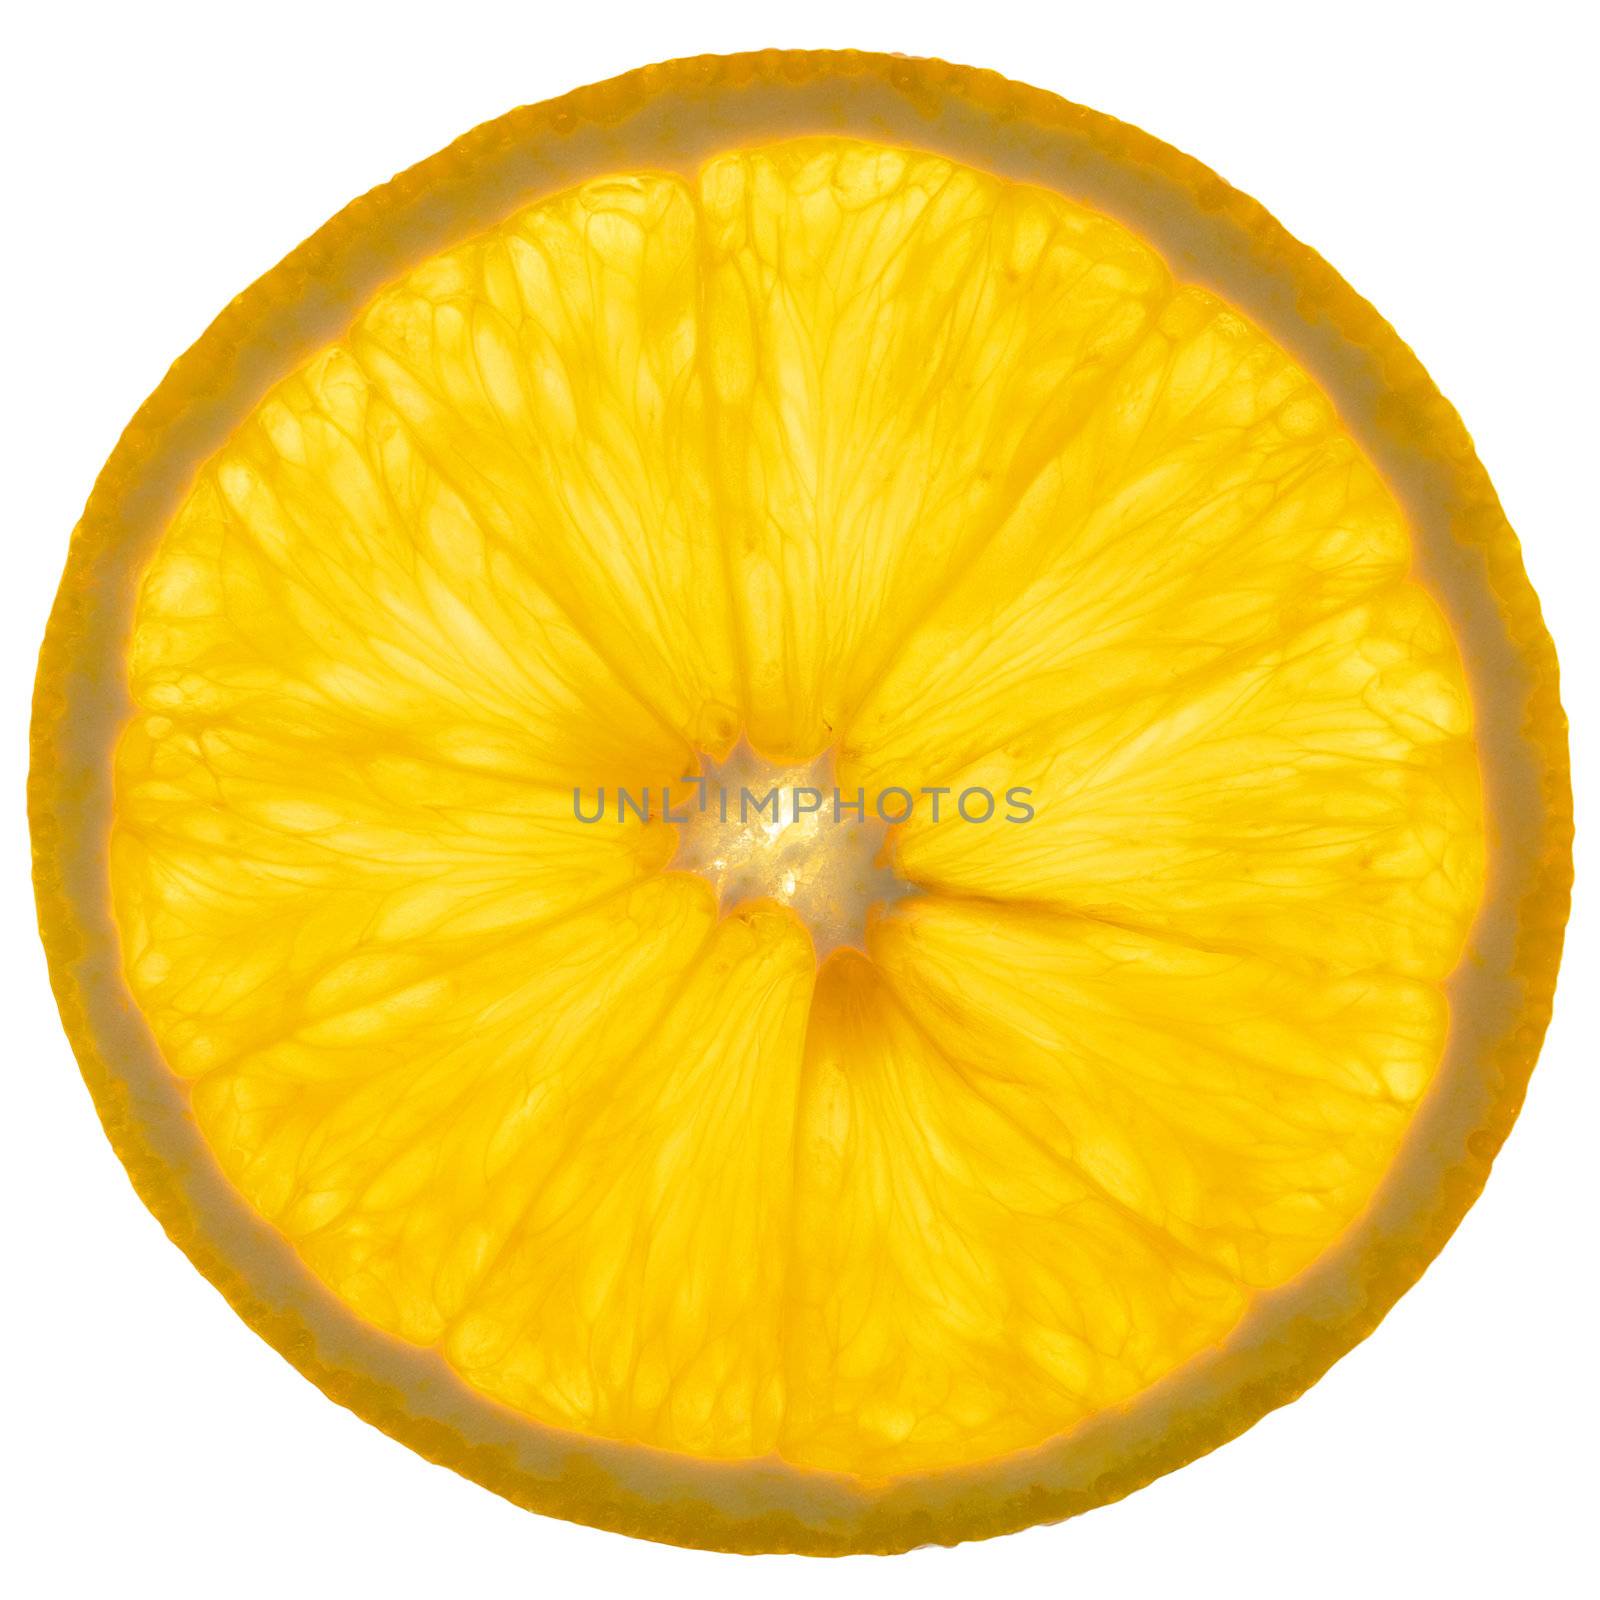 Thin slice of an orange on a white background